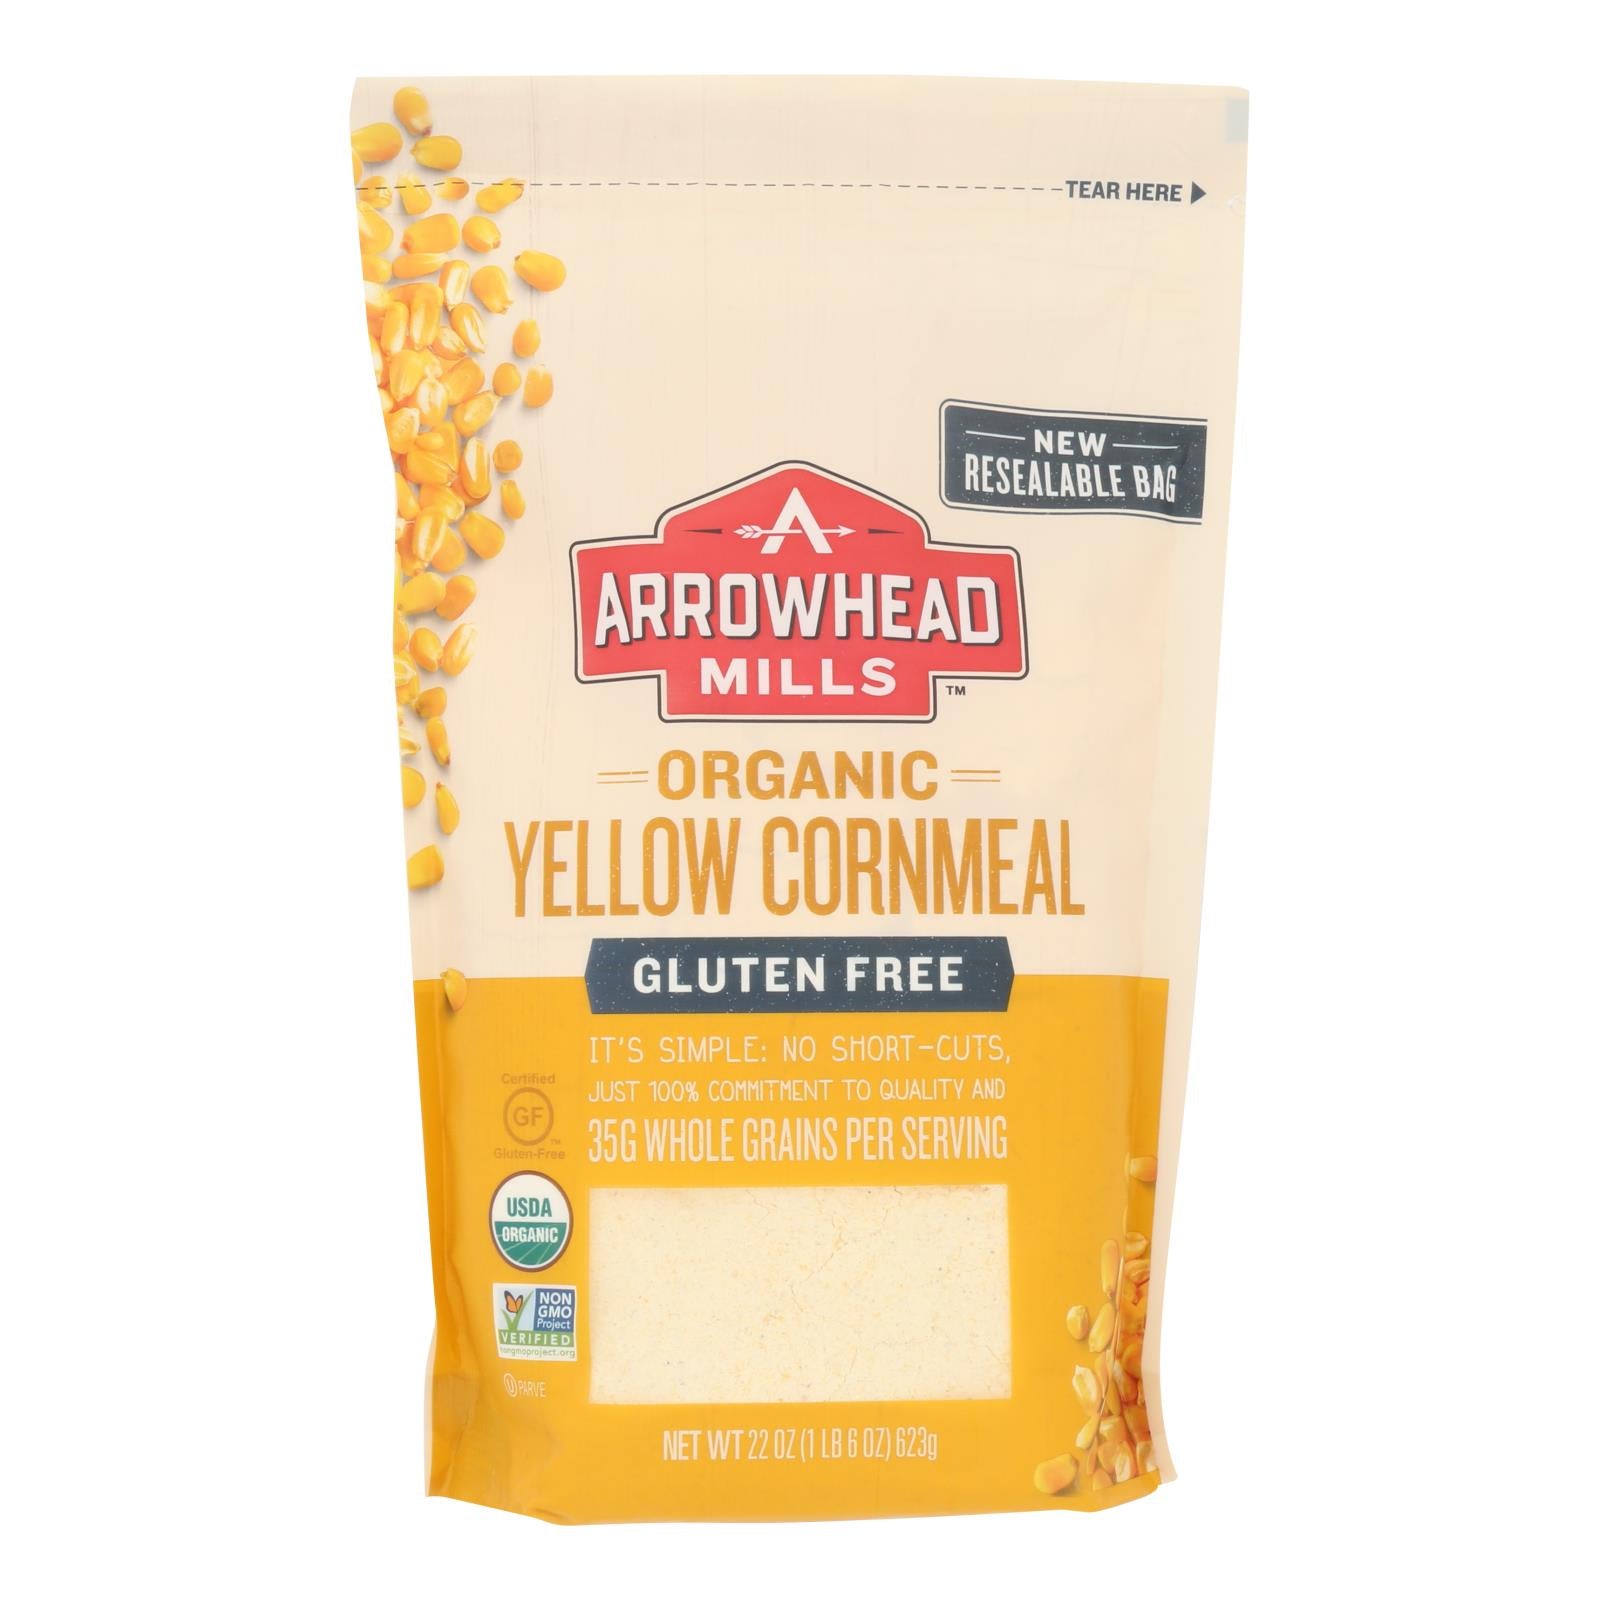 Arrowhead Mills, Arrowhead Mills - Organic Yellow Corn Meal - Gluten Free - Case of 6 - 22 oz. (Pack of 6)